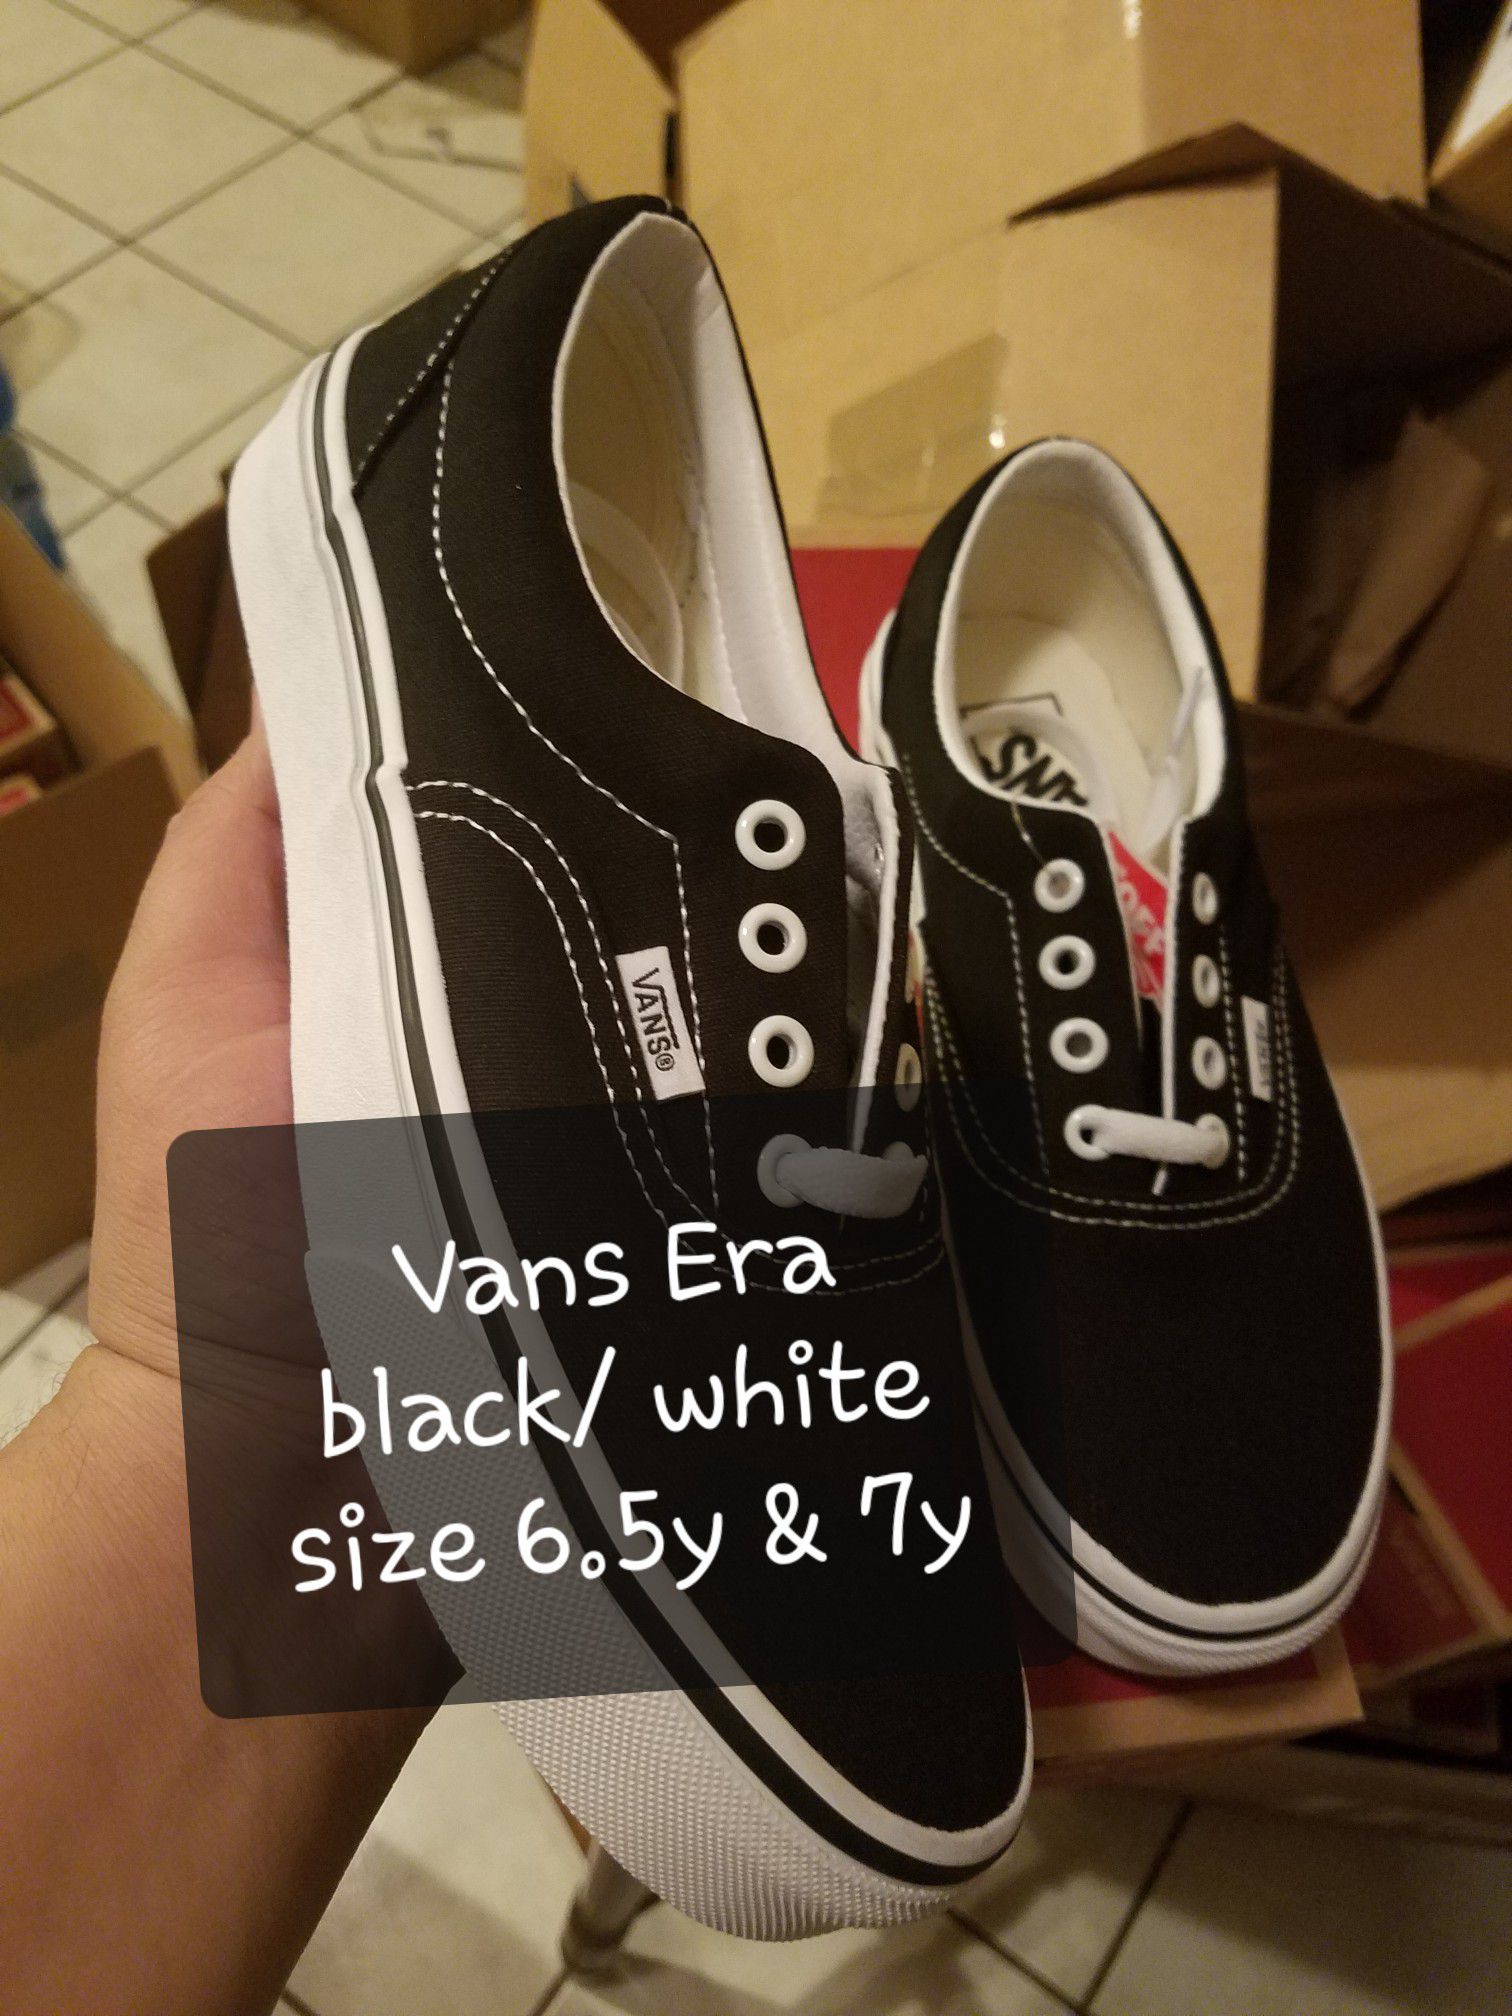 Vans era black white size 6.5y 7y new prices for each pair